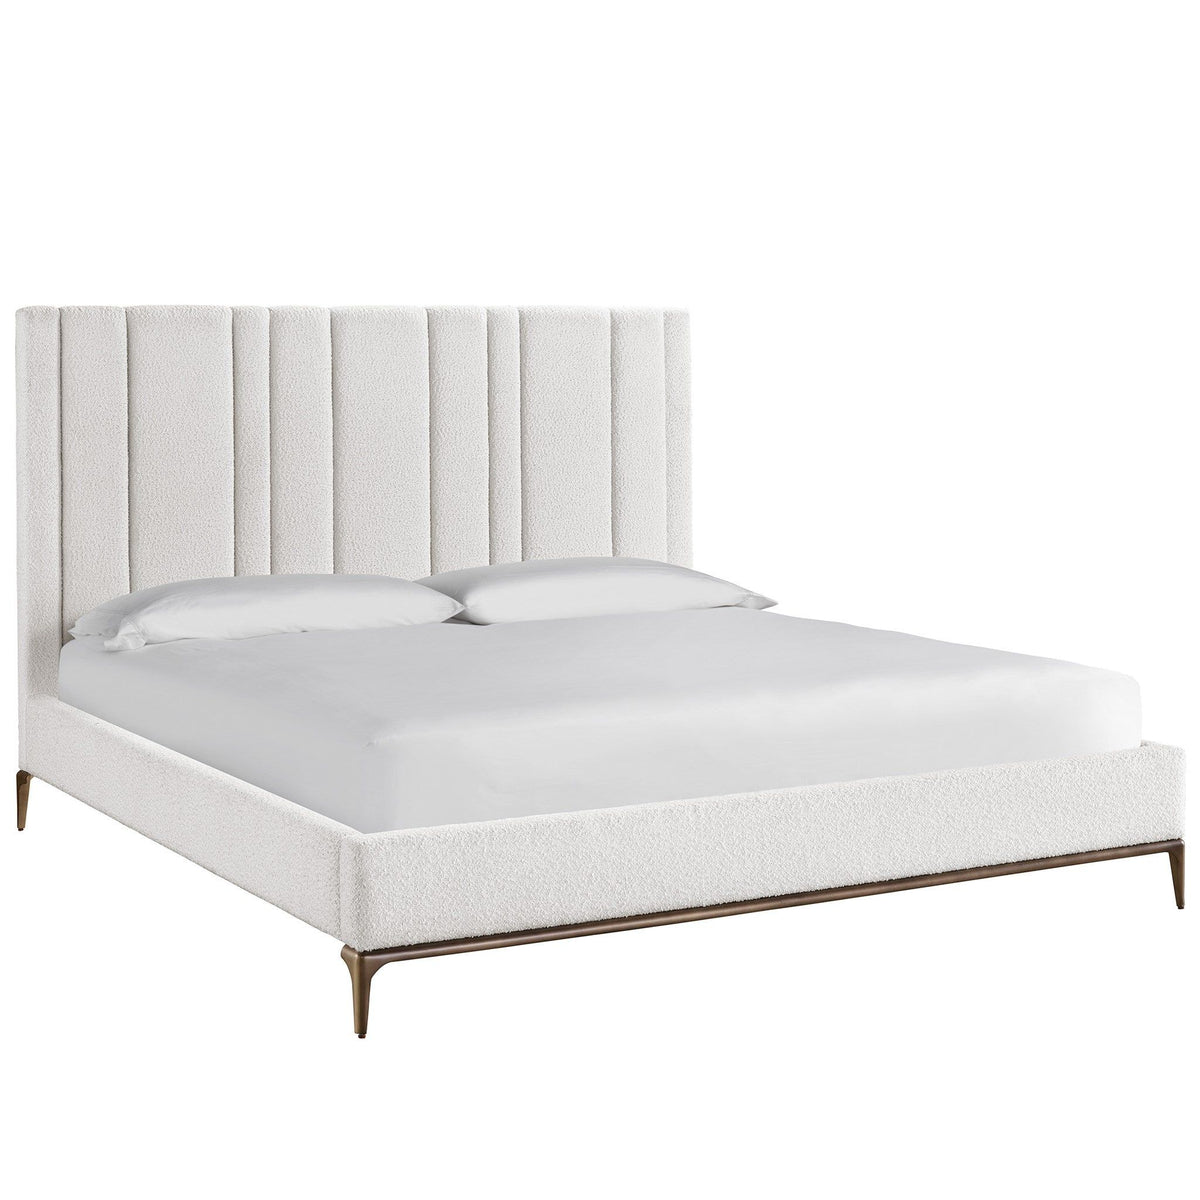 Summerland Upholstered Queen Bed